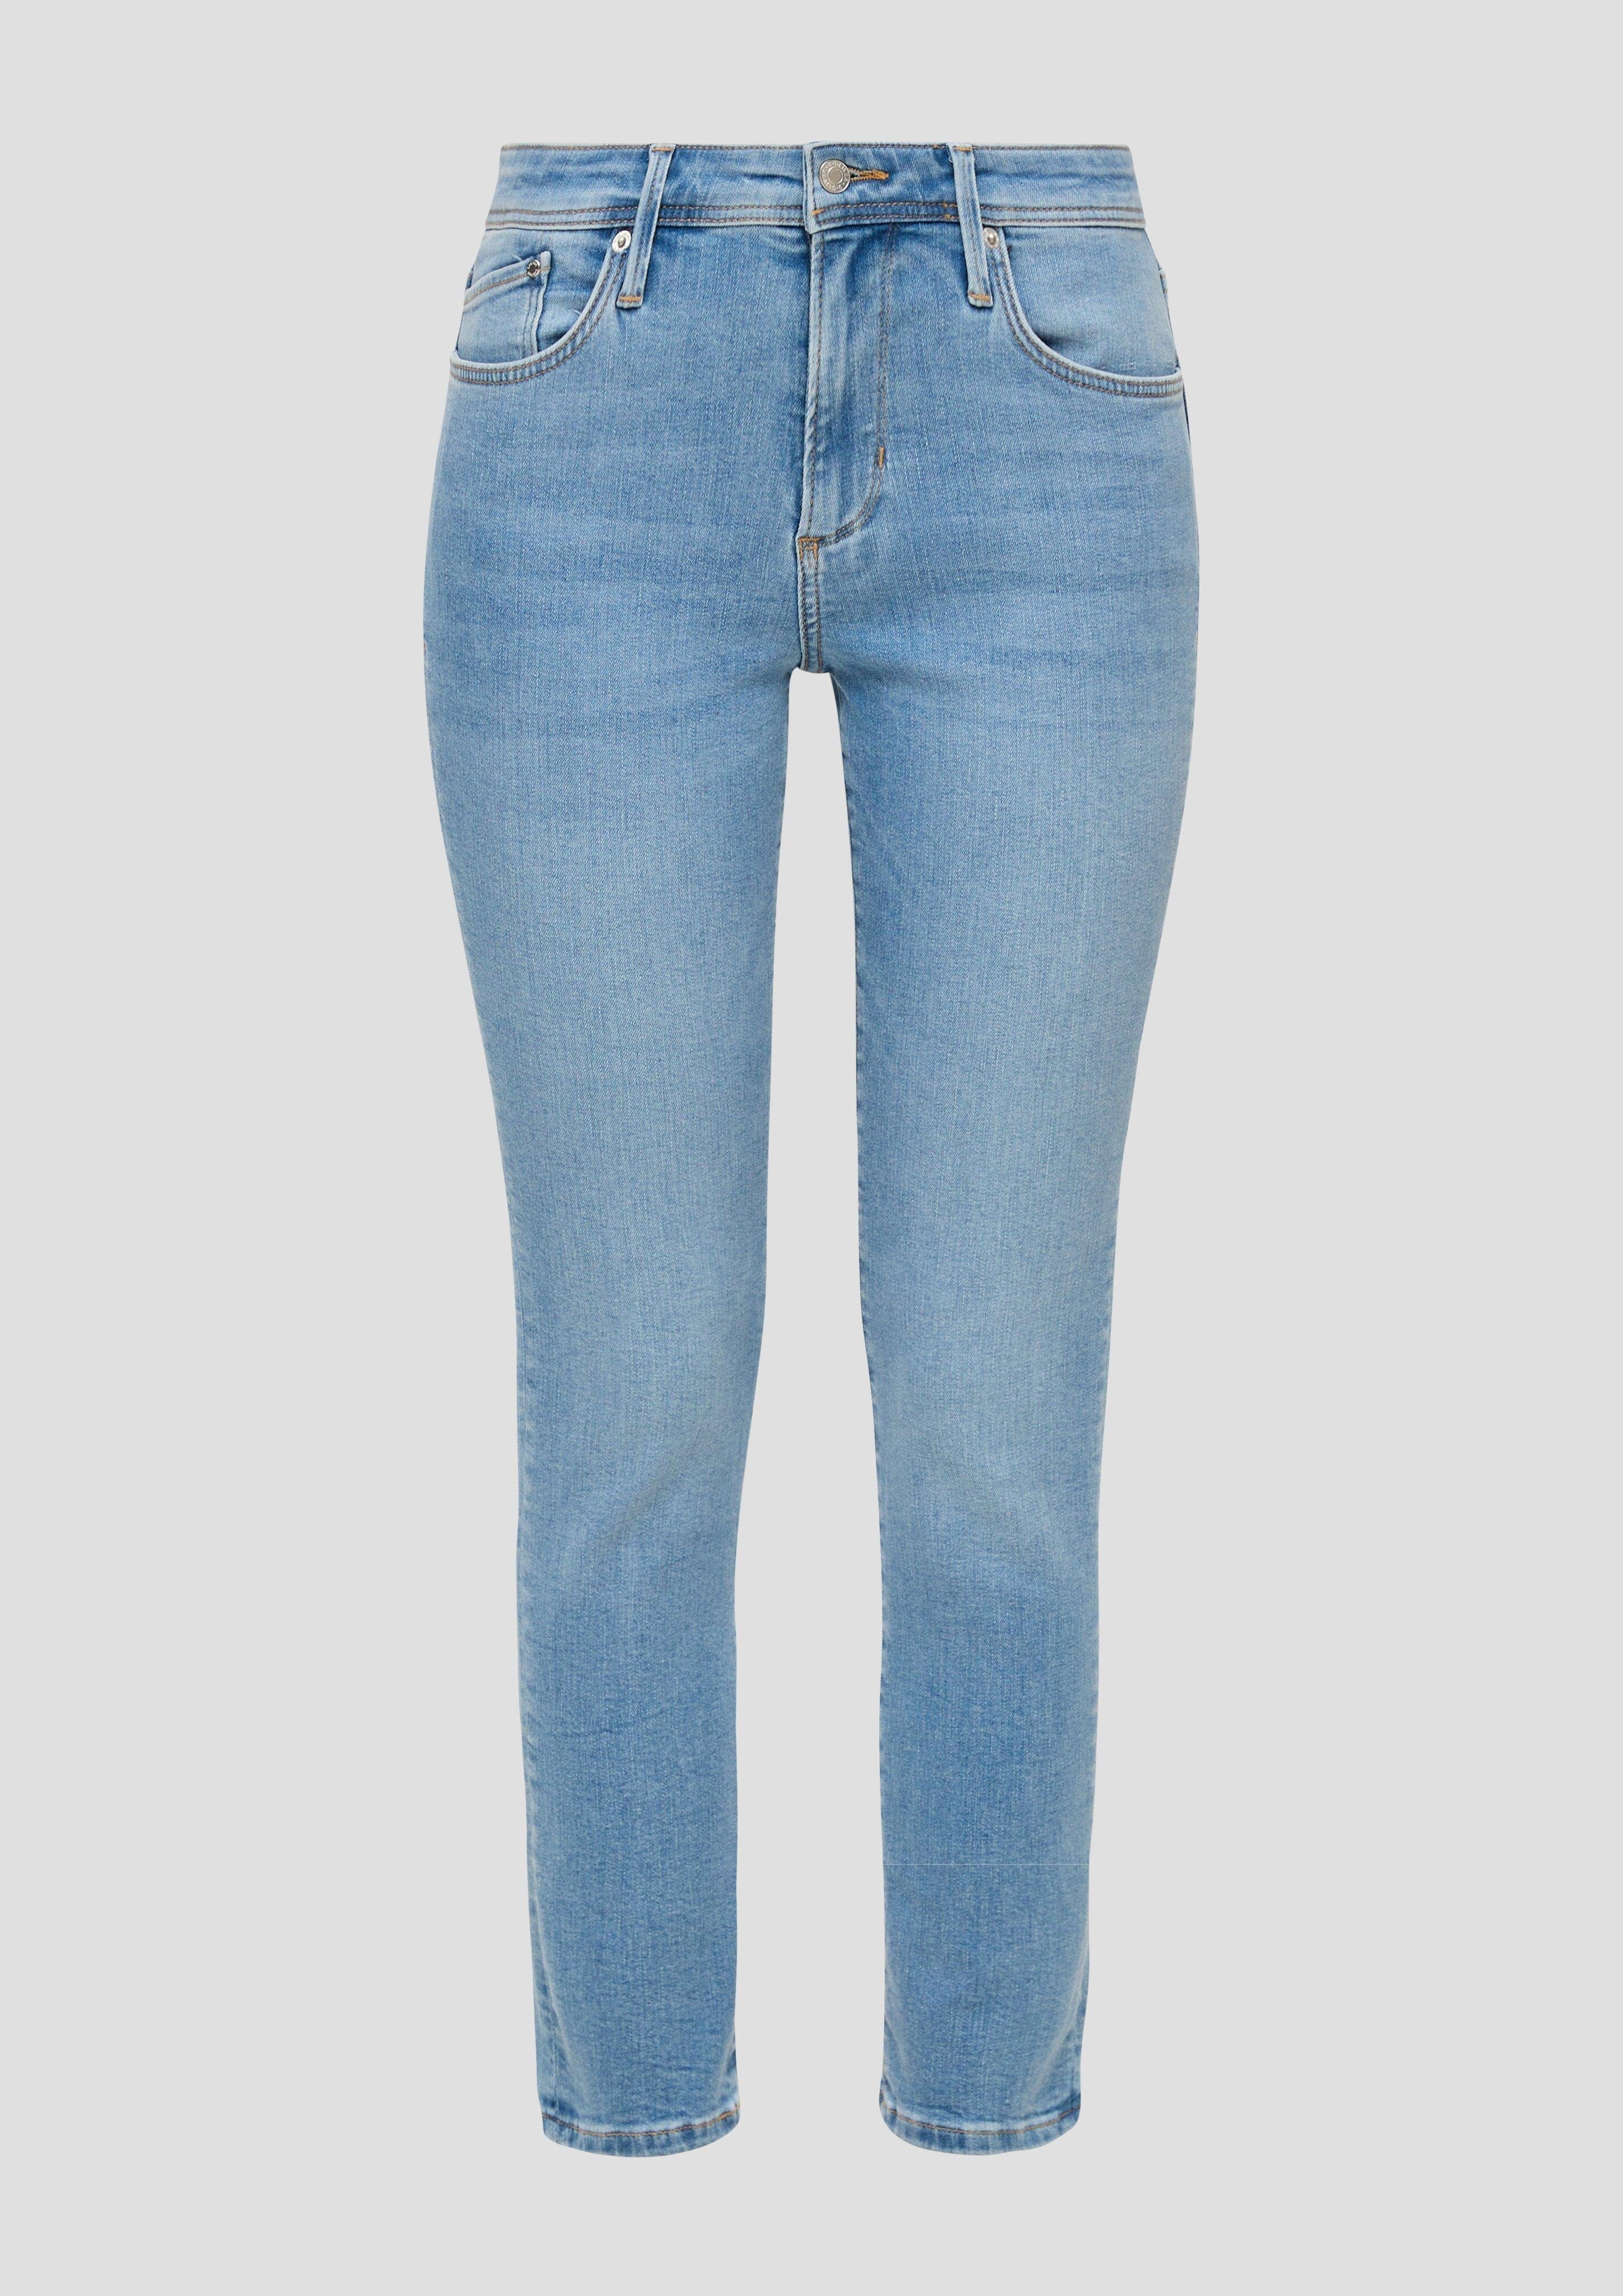 s.Oliver 7/8-Jeans Slim: Cropped Jeans himmelblau Waschung